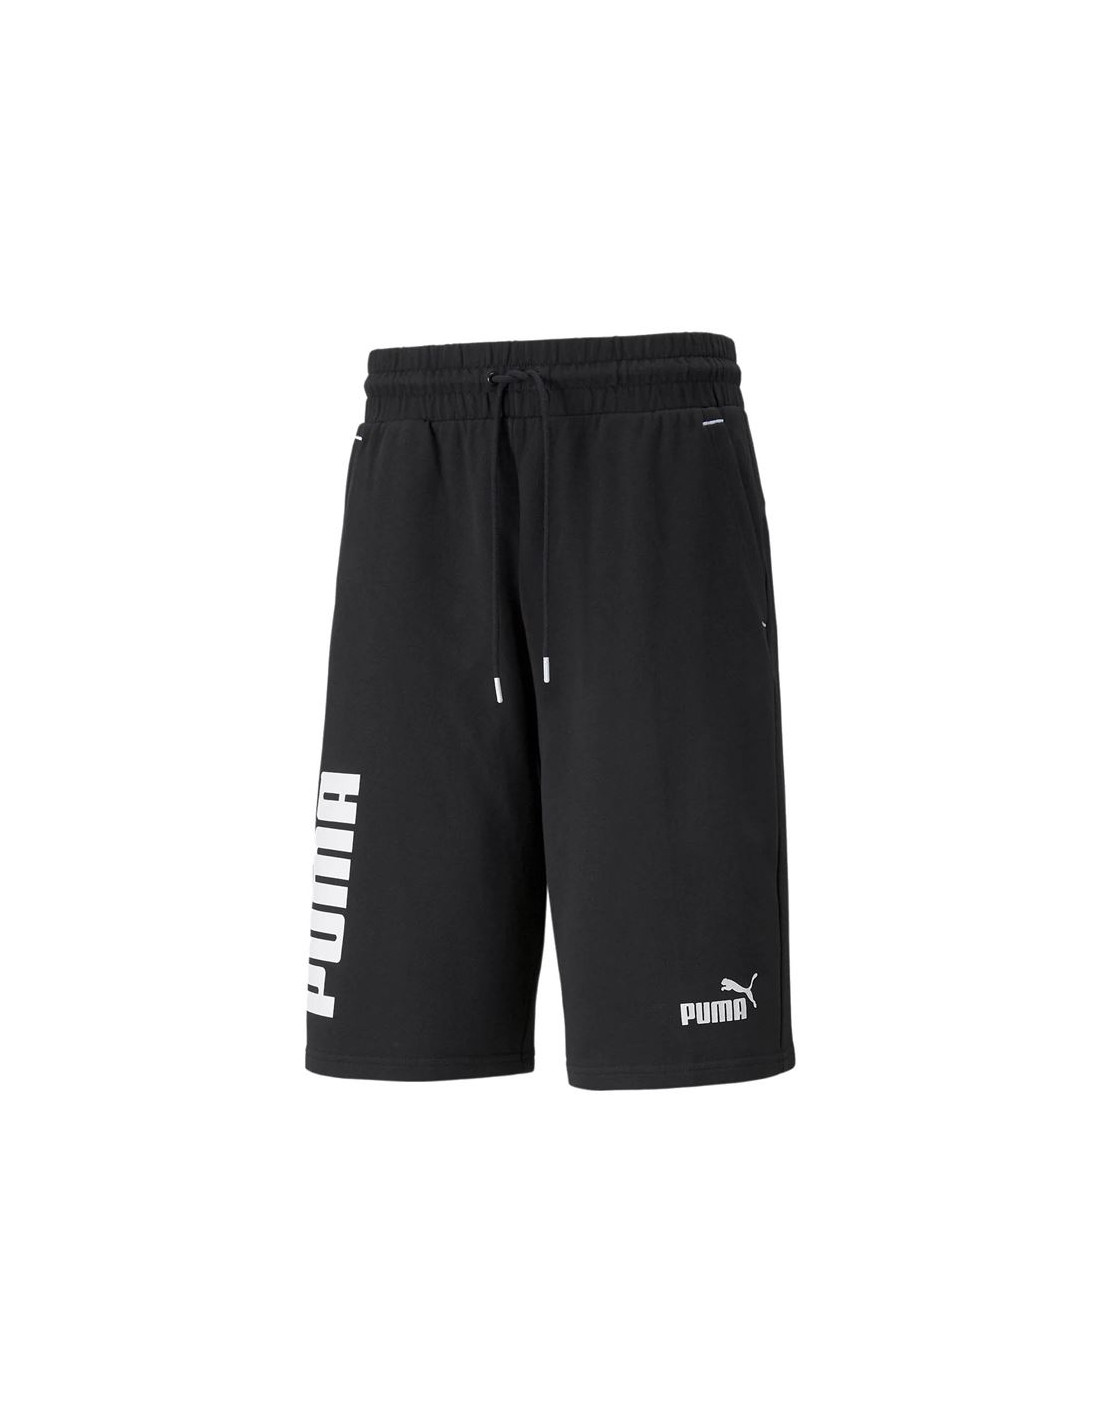 Pantalones puma power colorblock shorts 11 m black